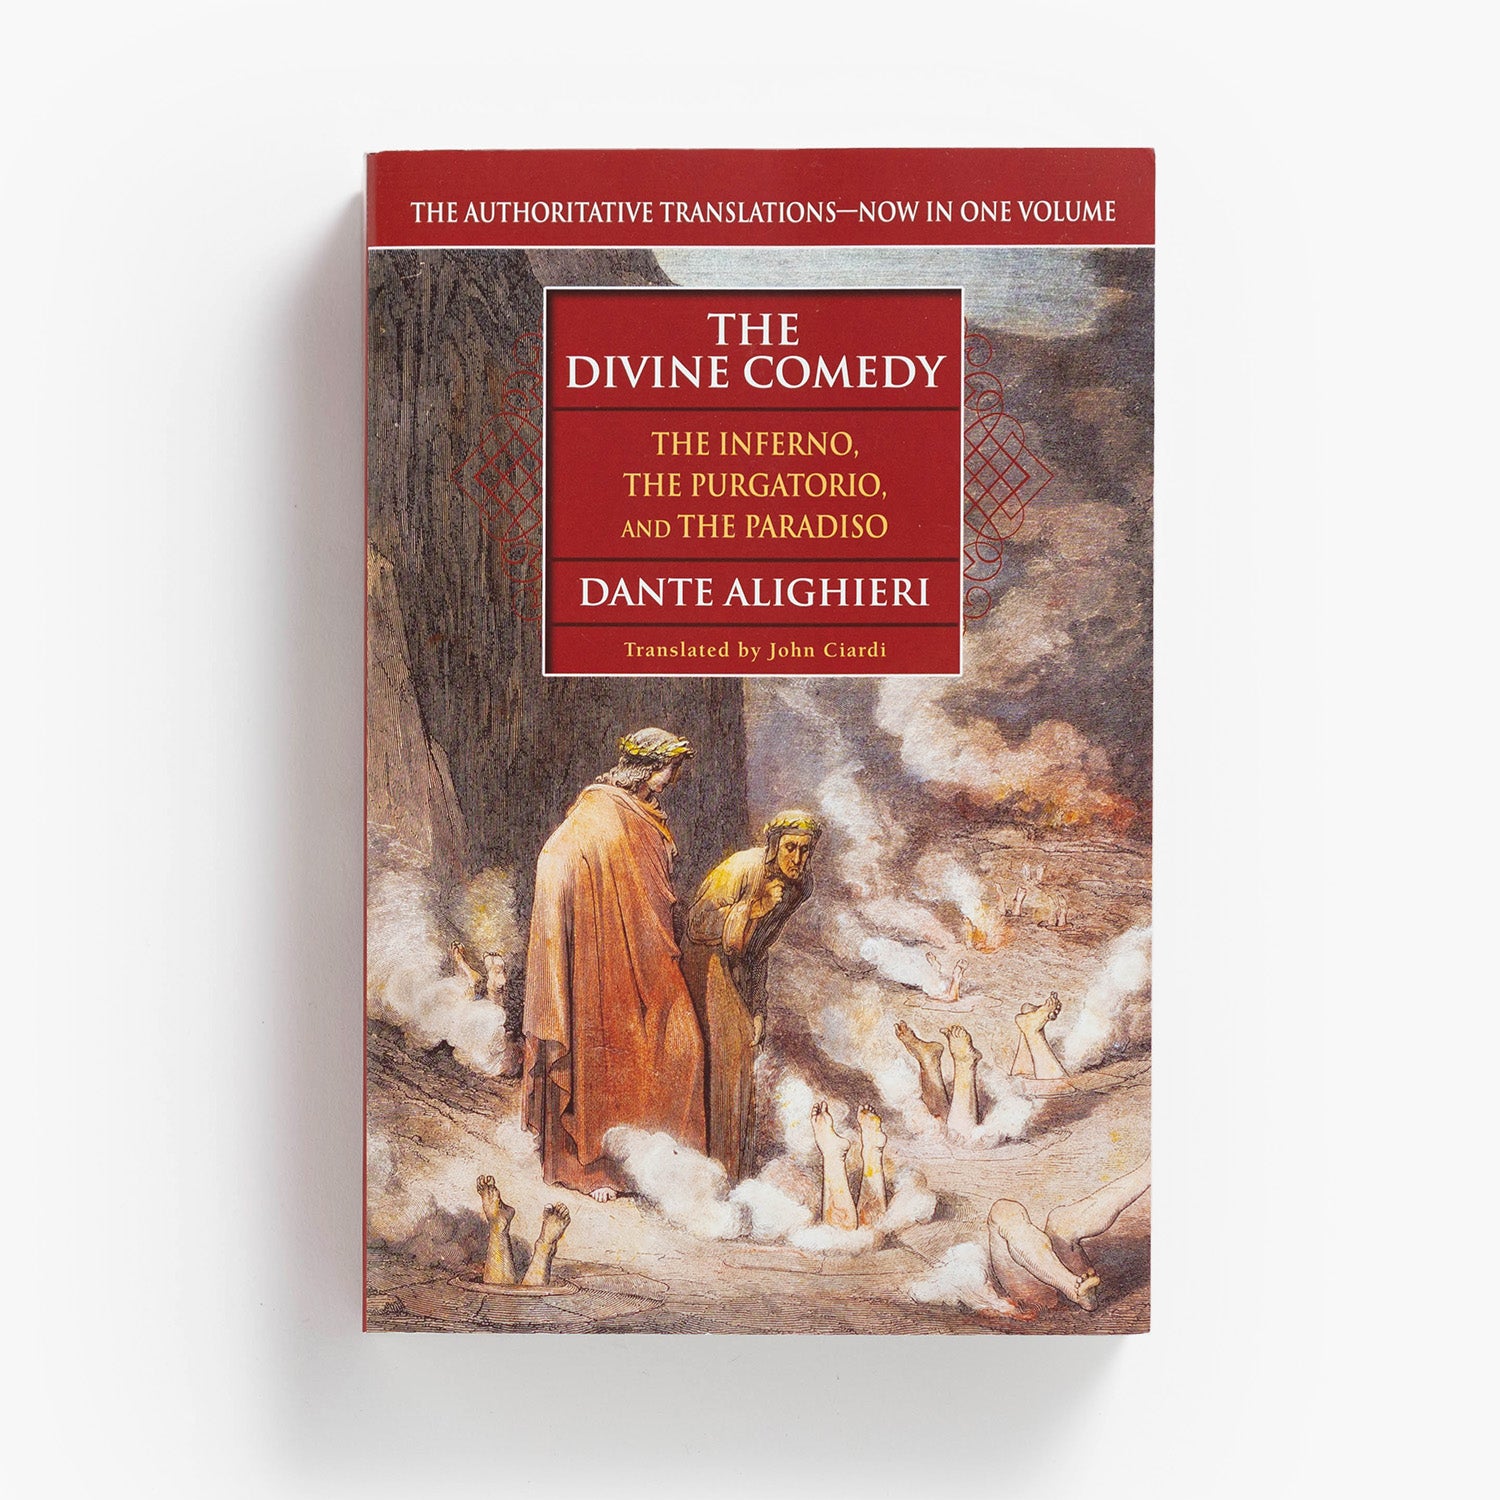 The Divine Comedy (The Inferno, The Purgatorio, and The Paradiso